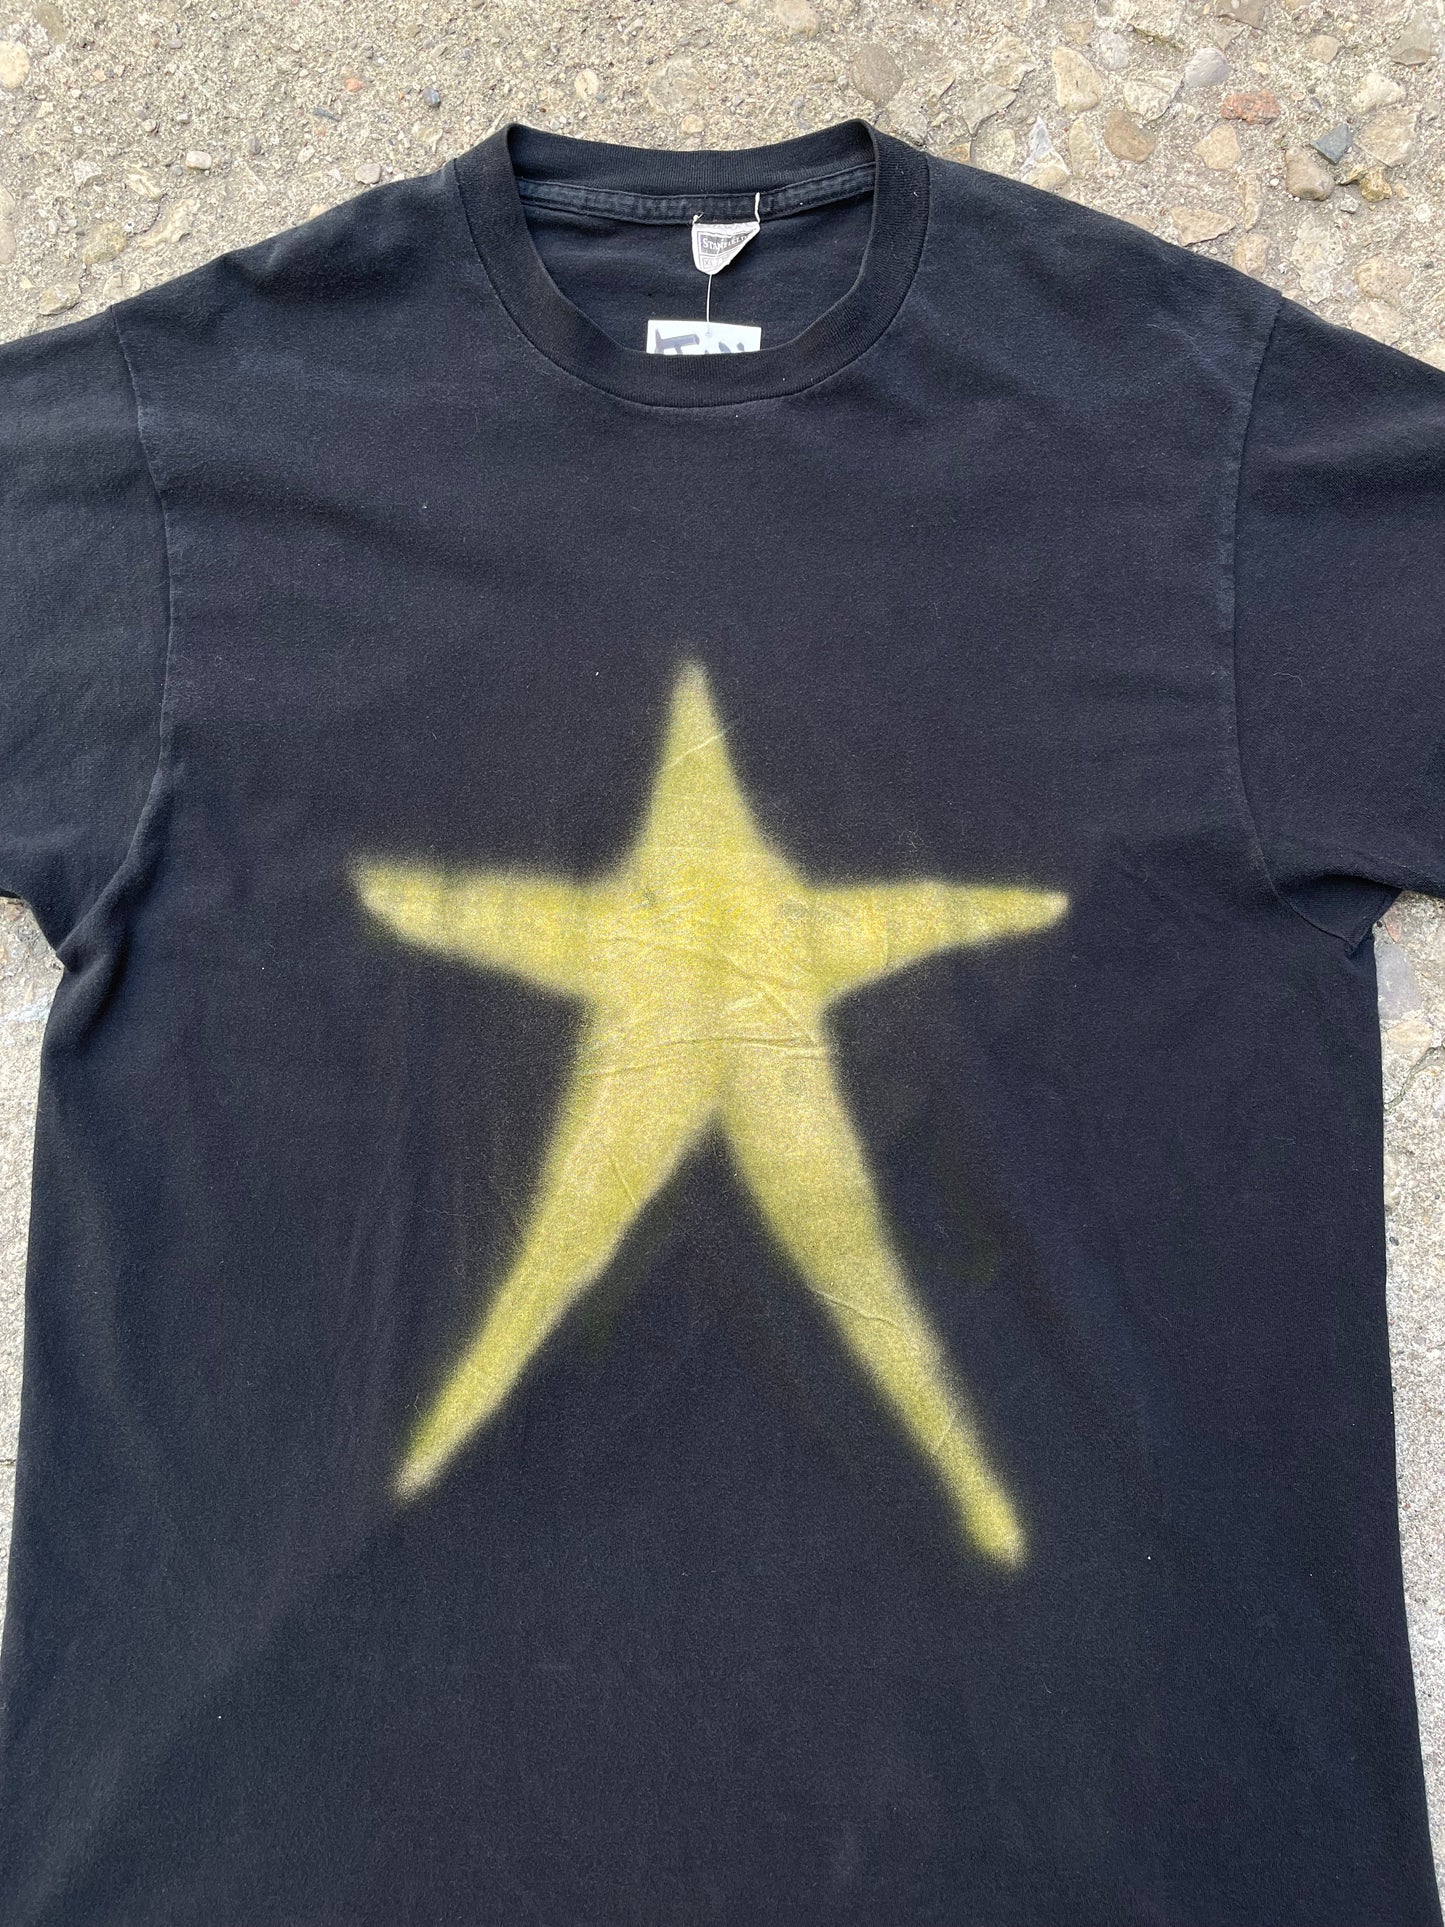 Zach Gucci Razal x Thrift Piff Airbrush 'Star' T-Shirt - XL